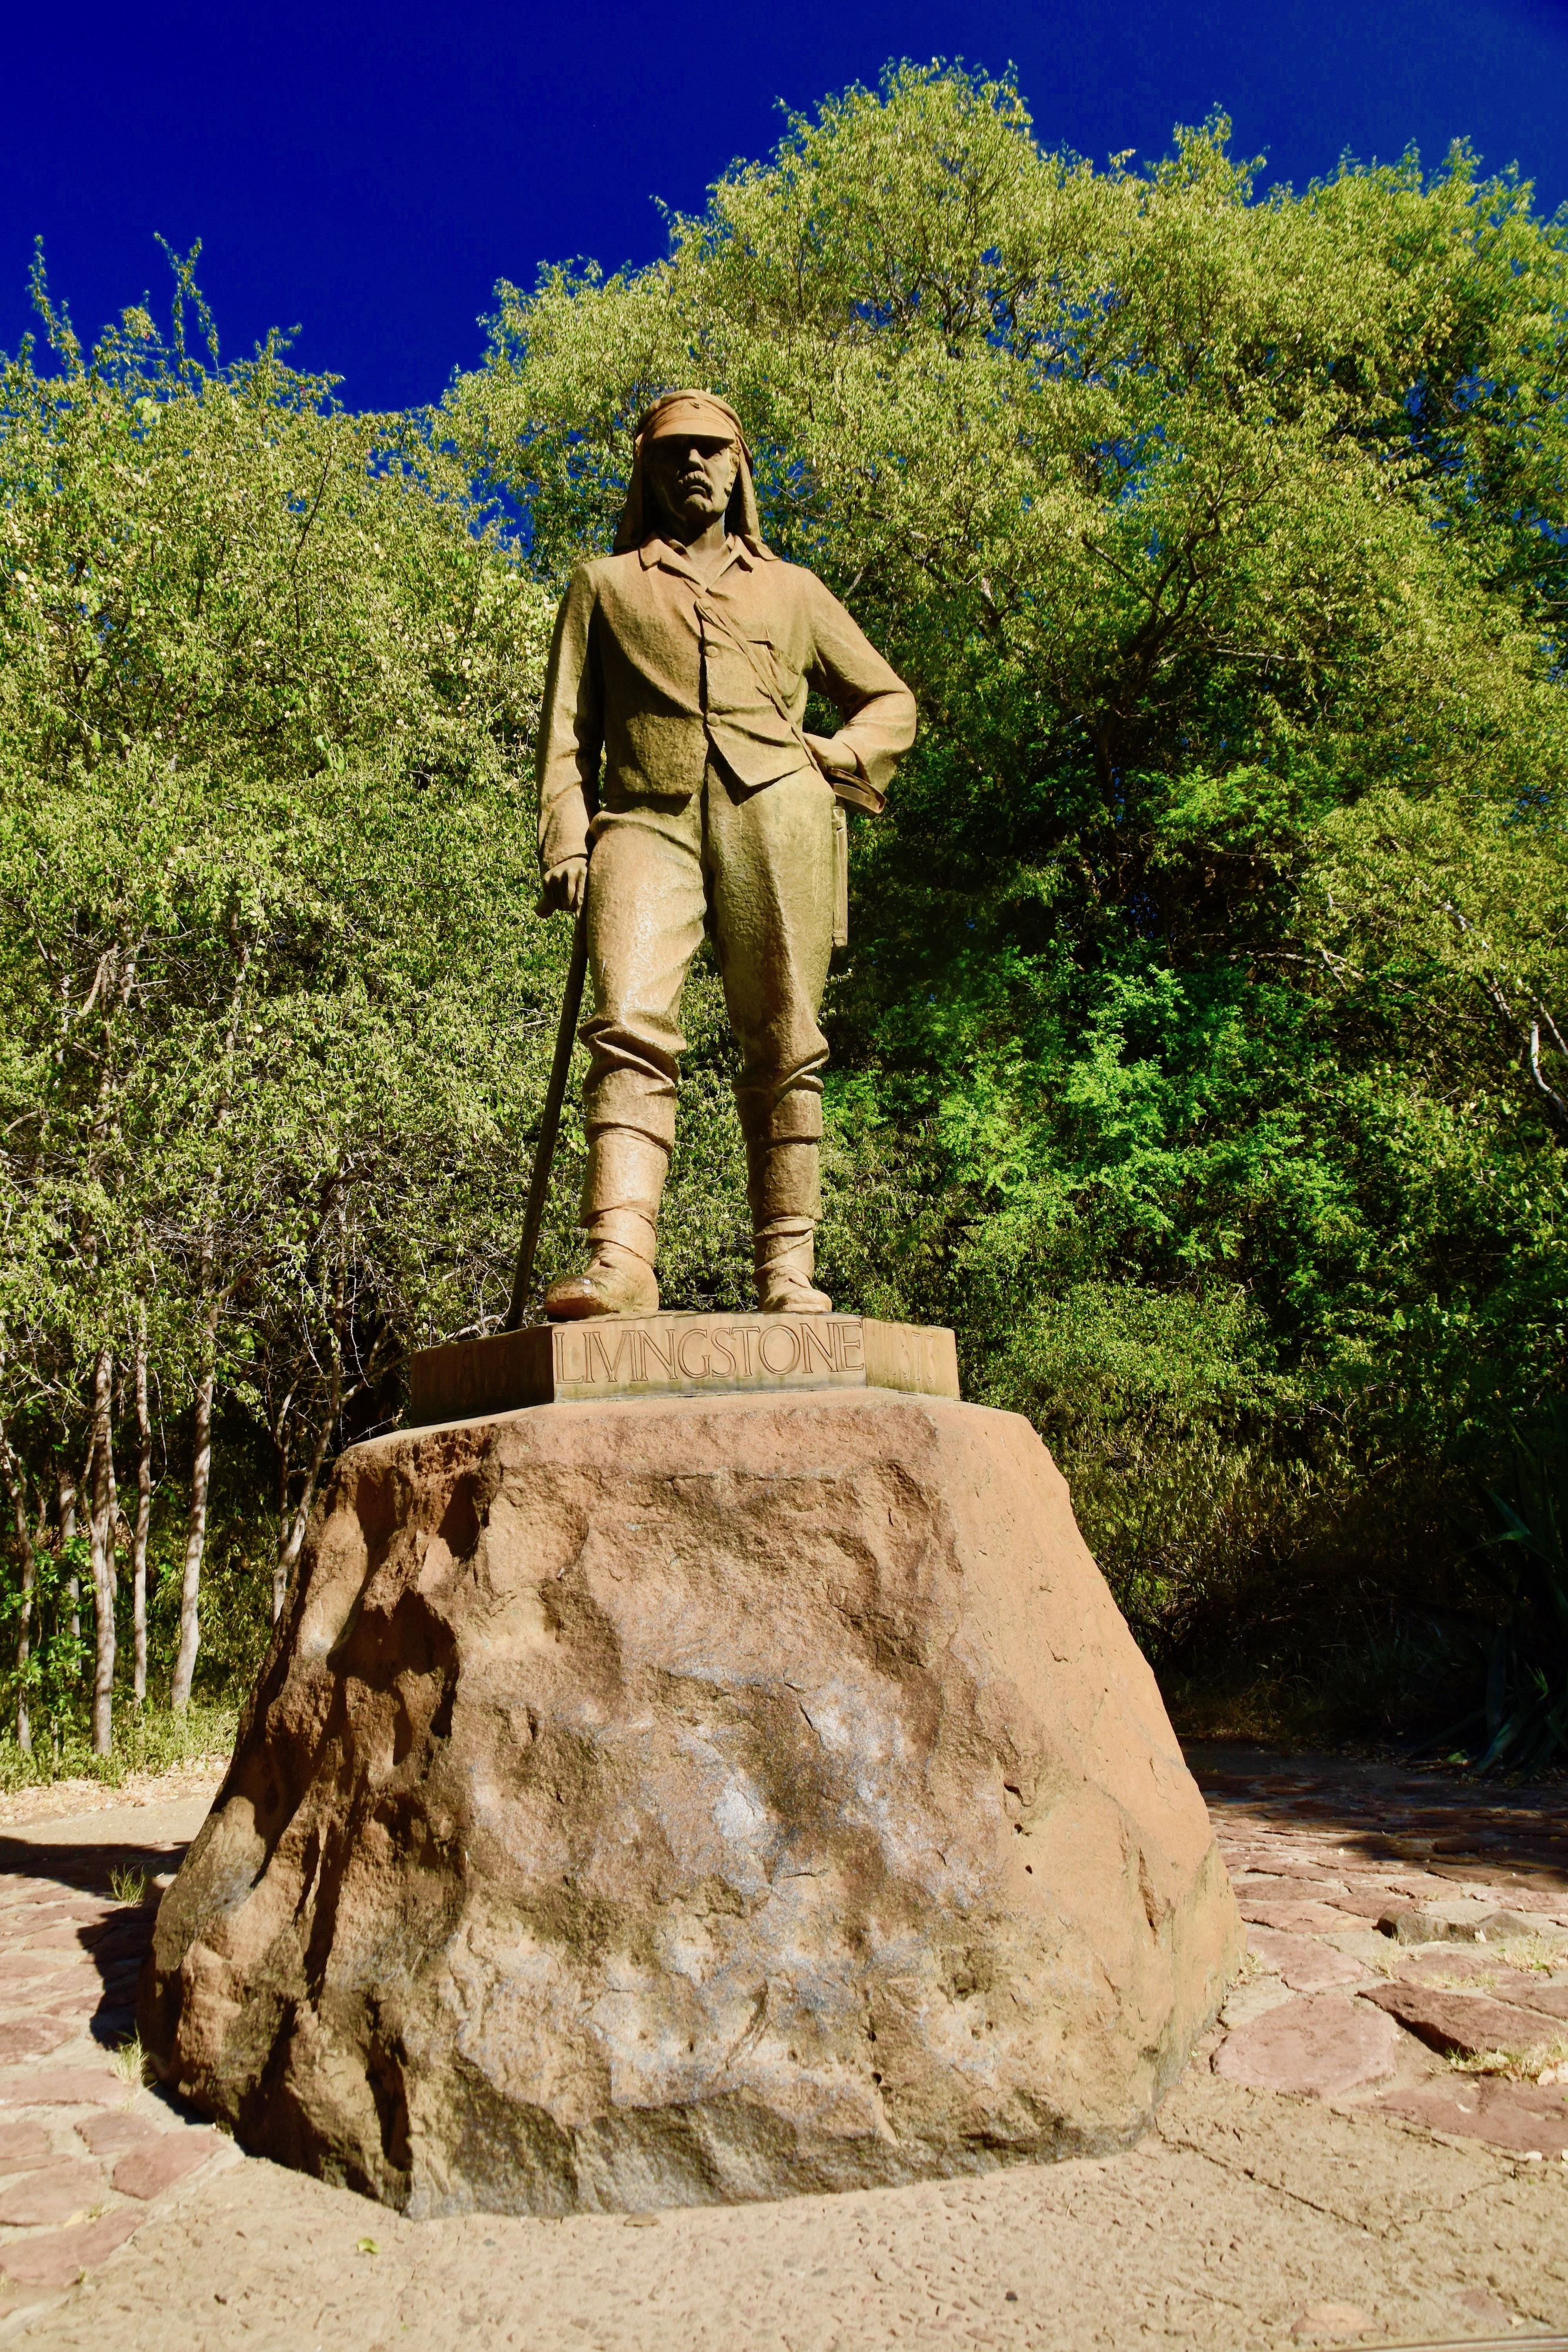 Statue of Livingstone at Victoria Falls